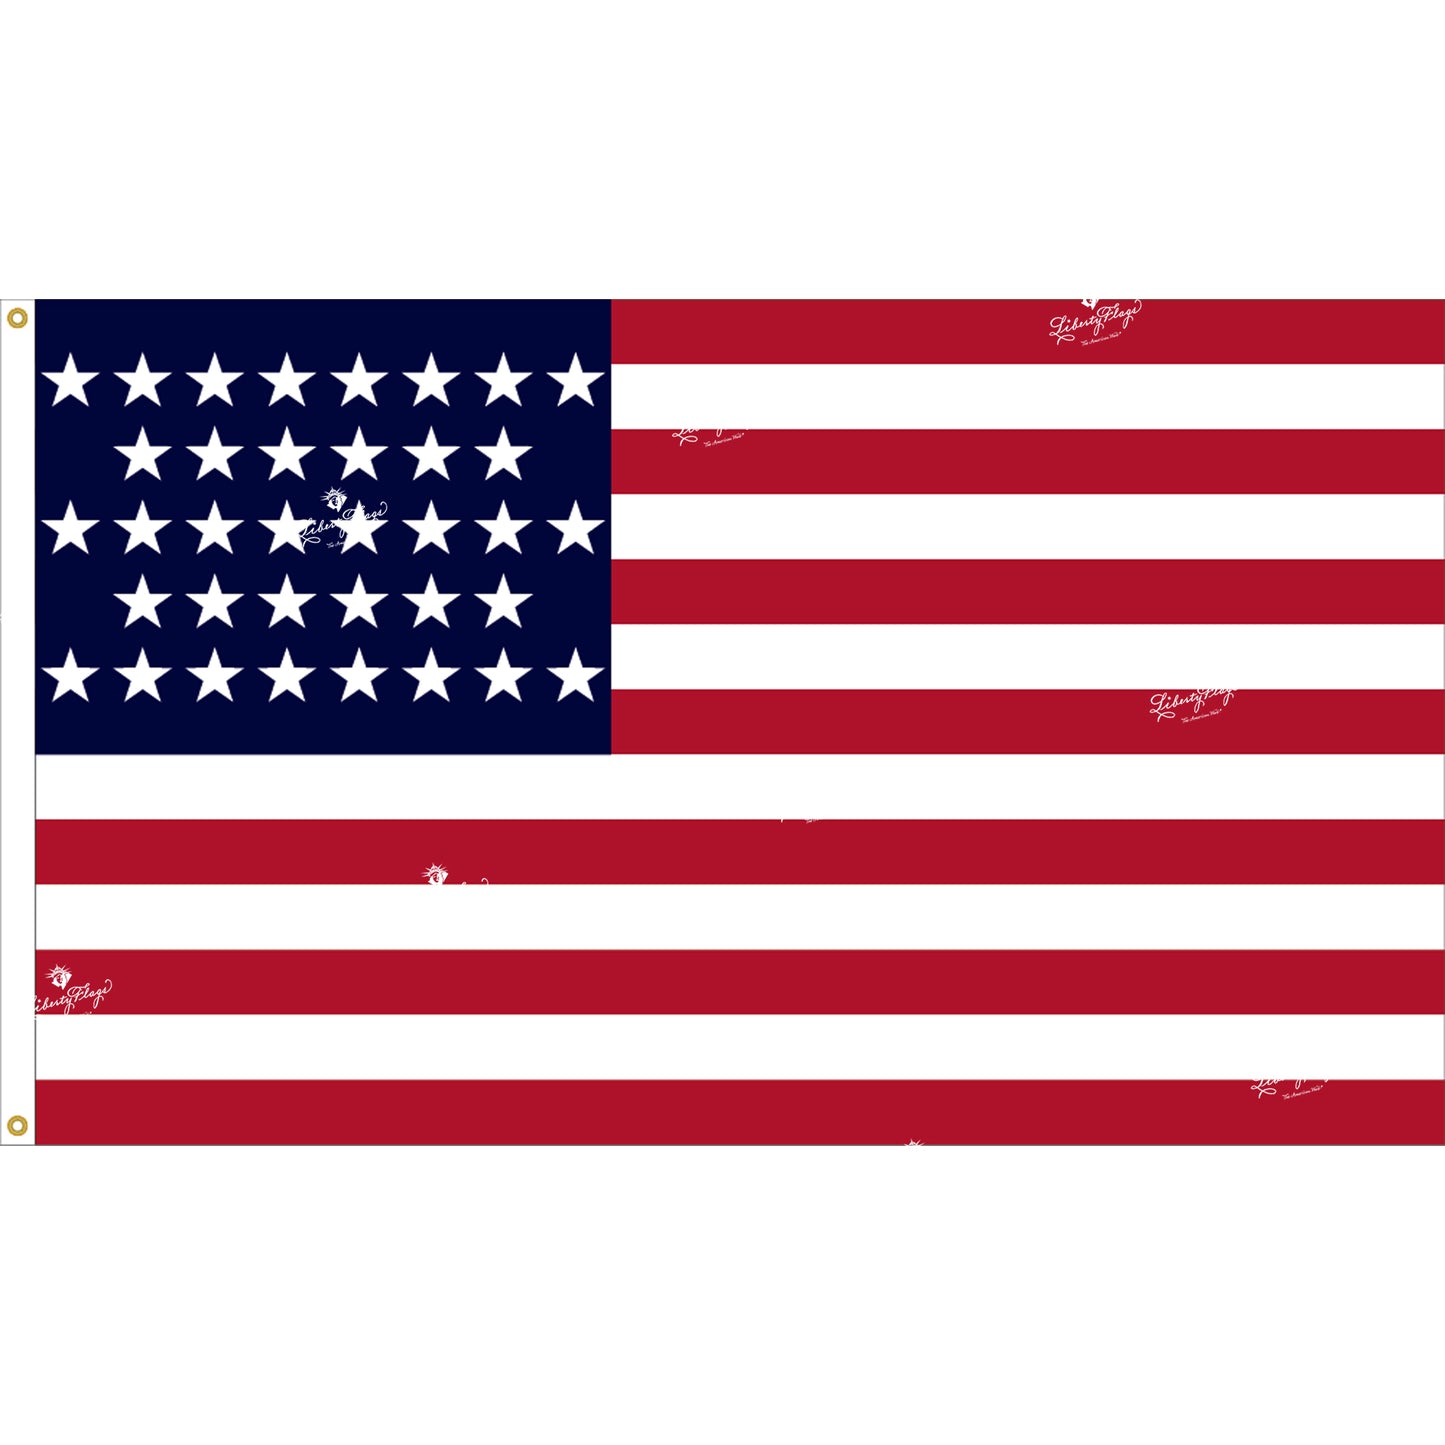 36 Star Outdoor Historic U.S. Flags